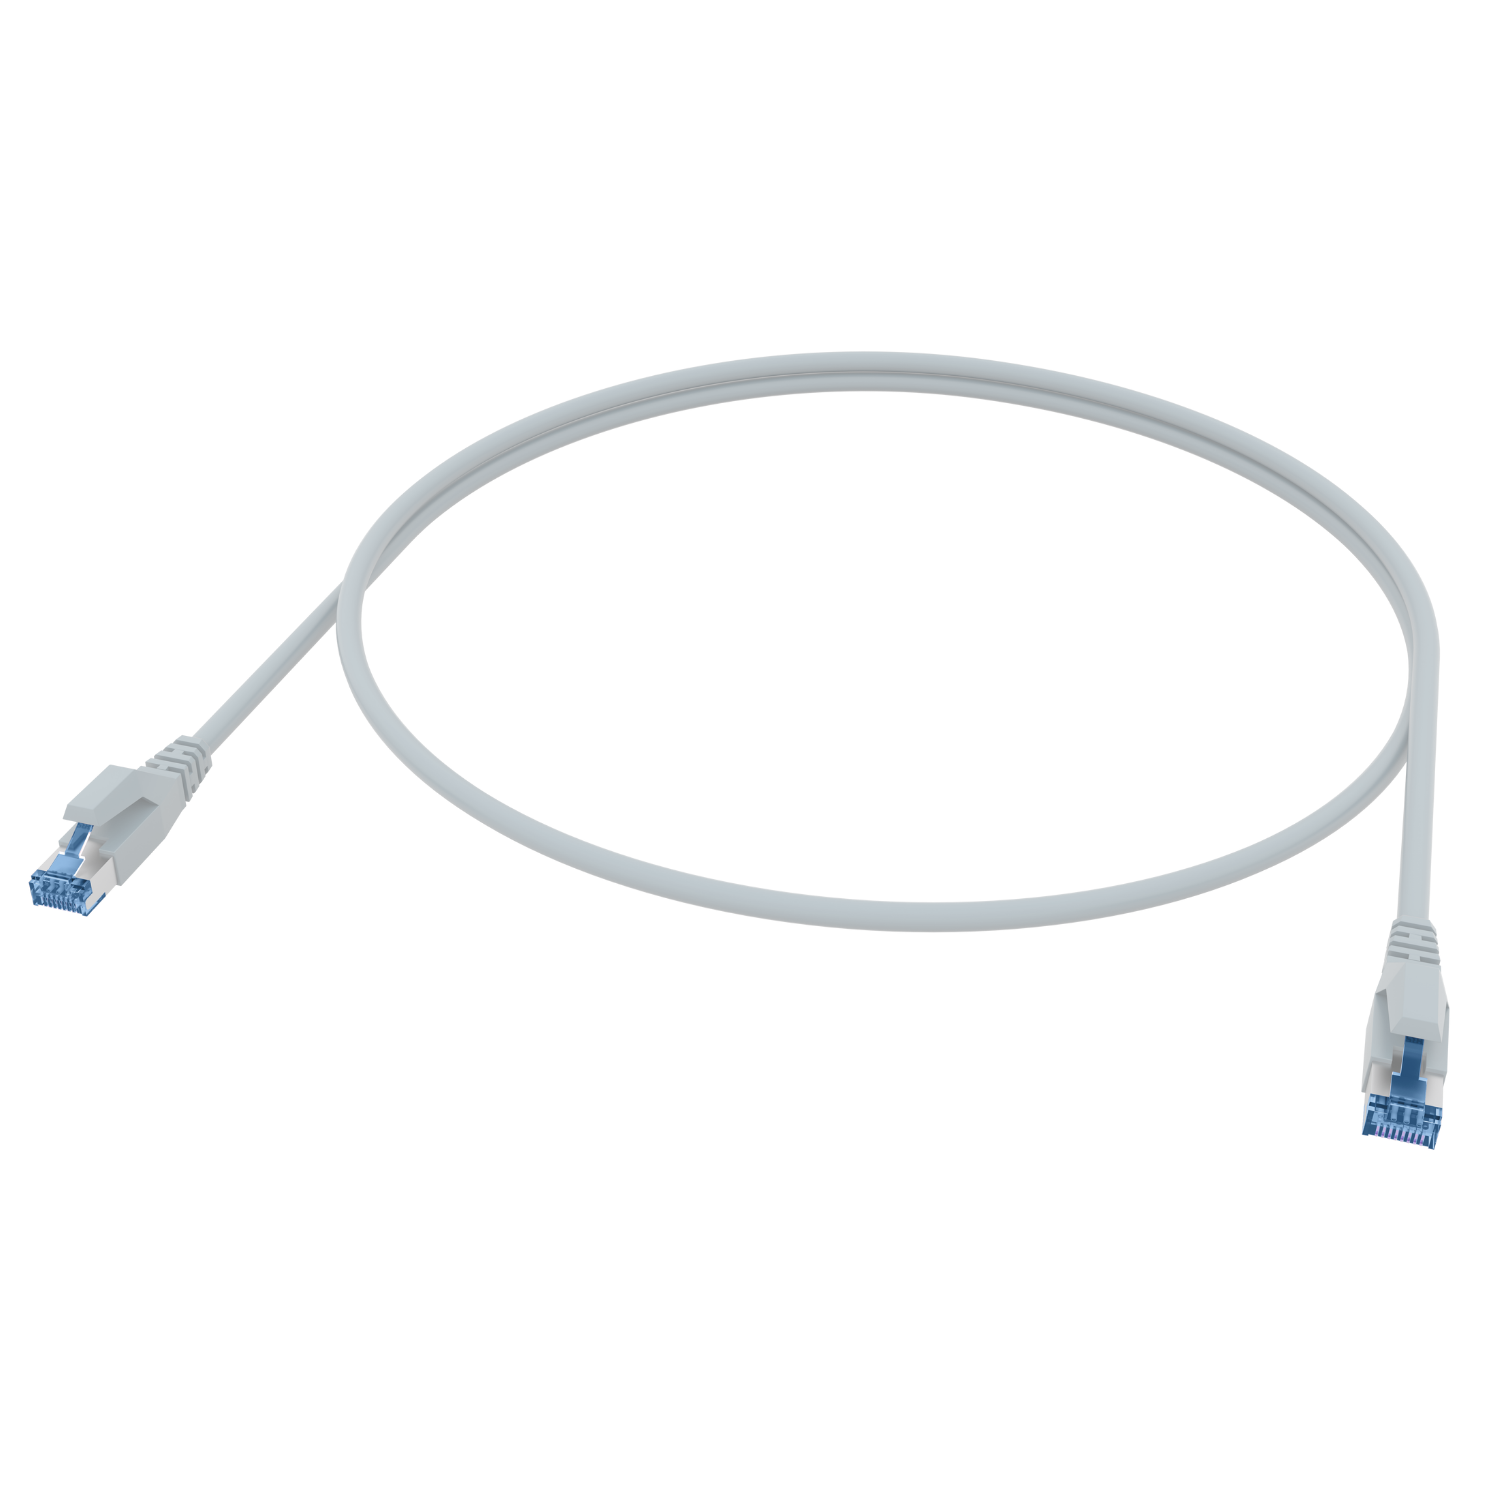 AIXONTEC 0,35m RJ45 Lankabel 10 Netzwerkkabel, Ethernetkabel m Gigabit, 0,35 Universal